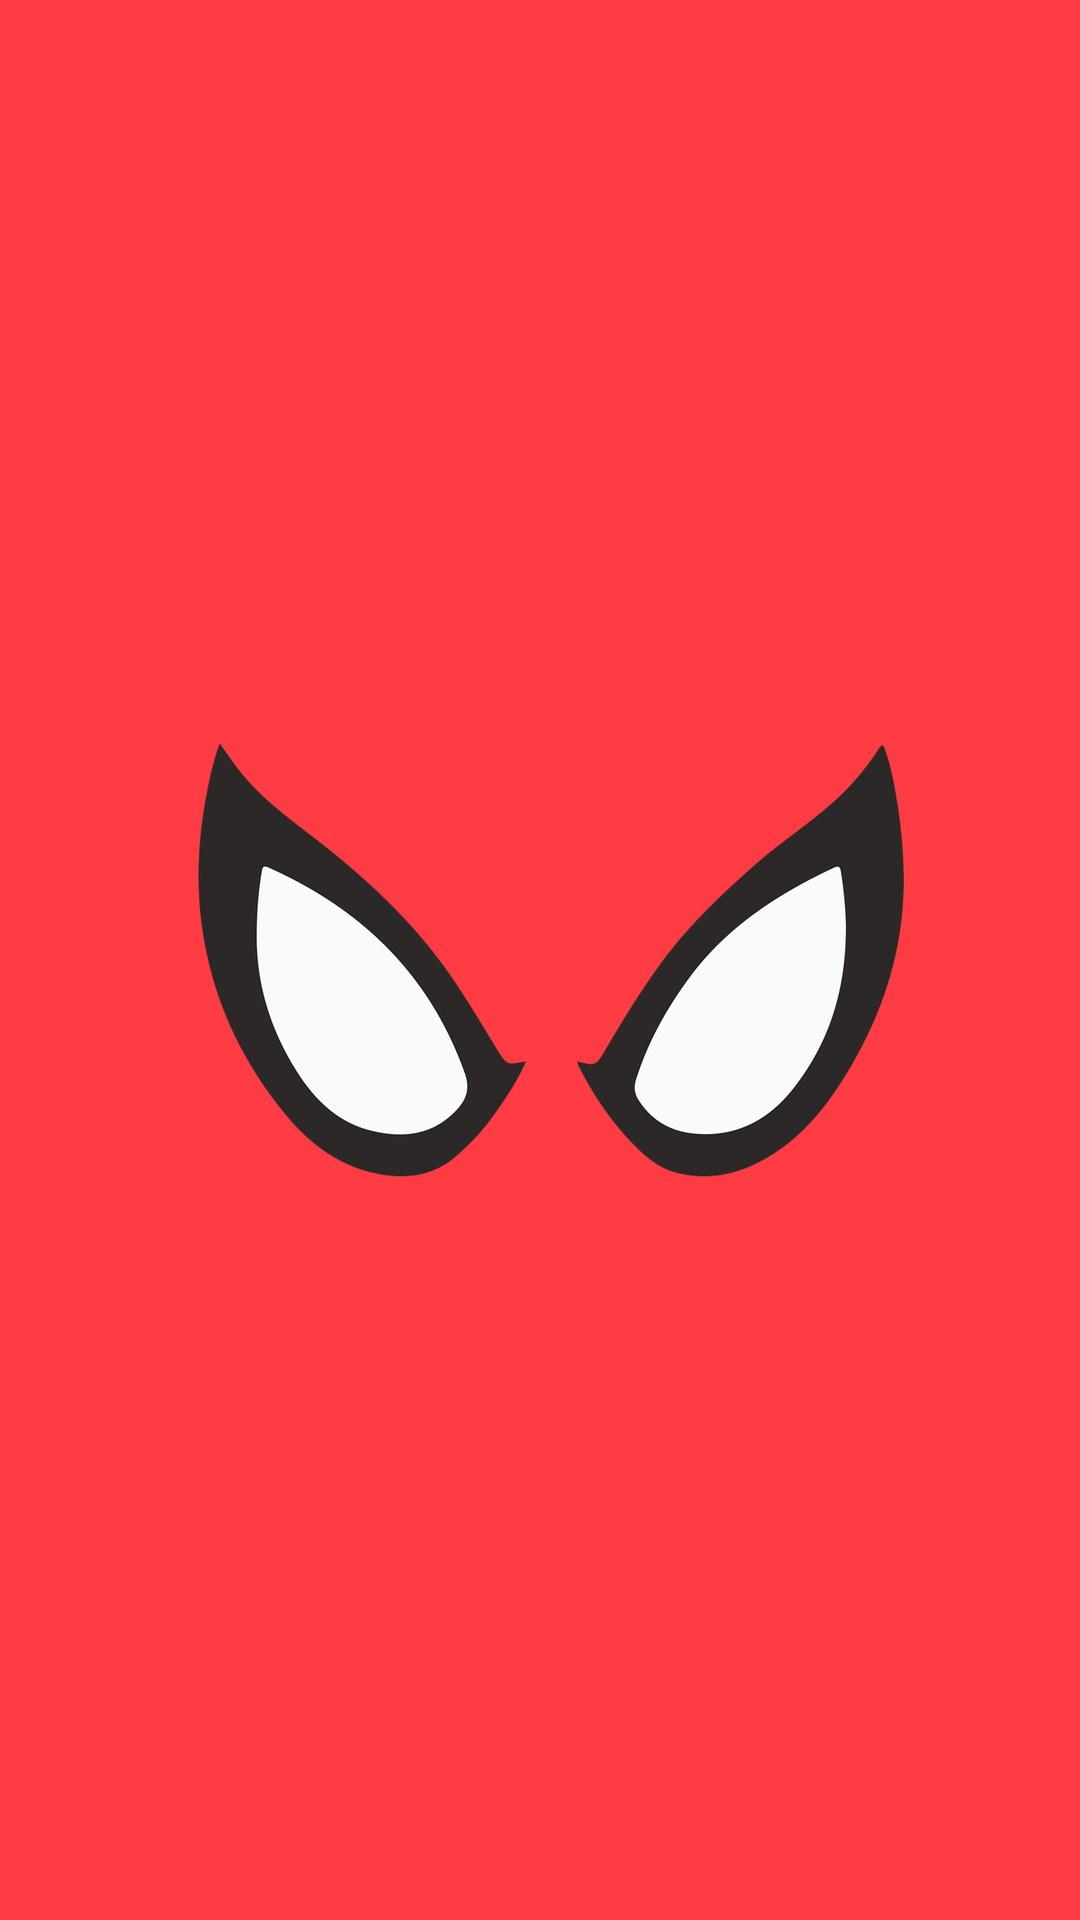 1080x1920 Spiderman Red Minimal Background 4k Iphone 7,6s,6 Plus, Pixel ...